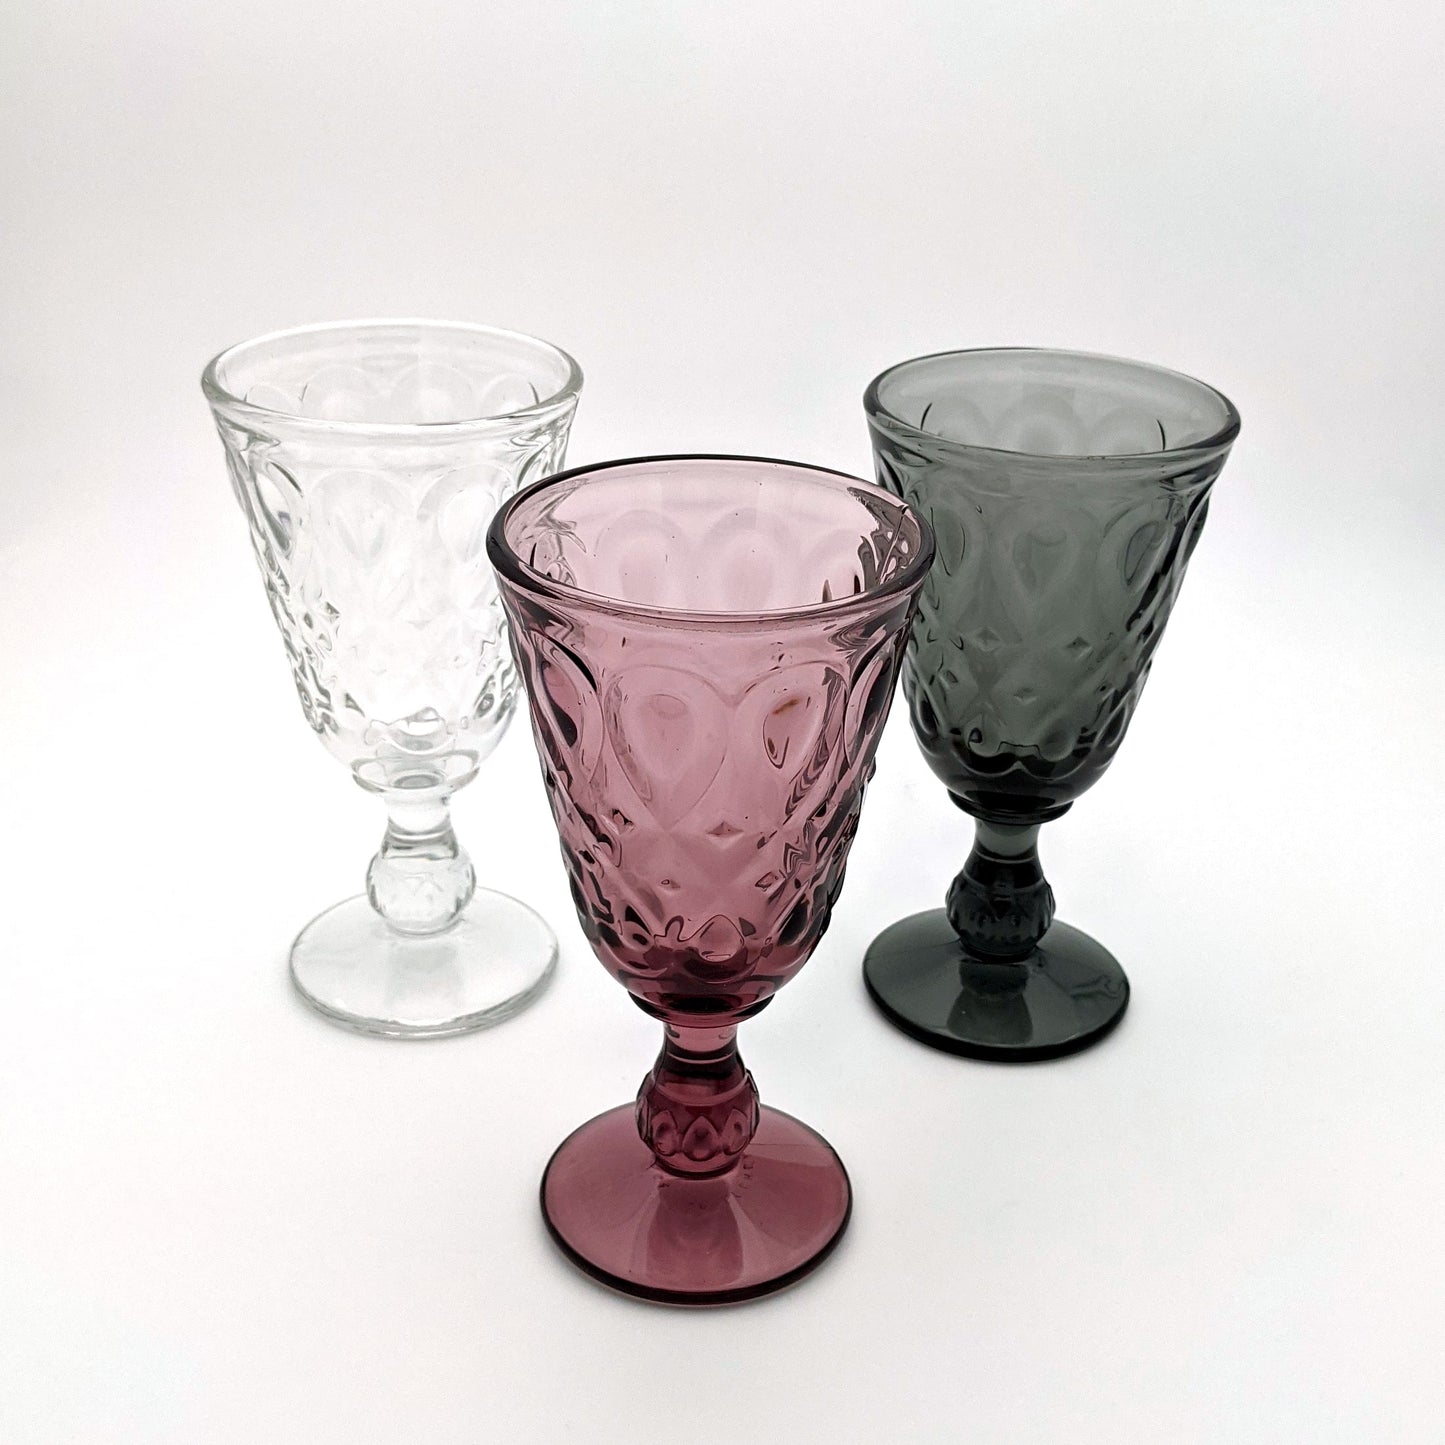 Renaissance wine glasses (x2) - French Address